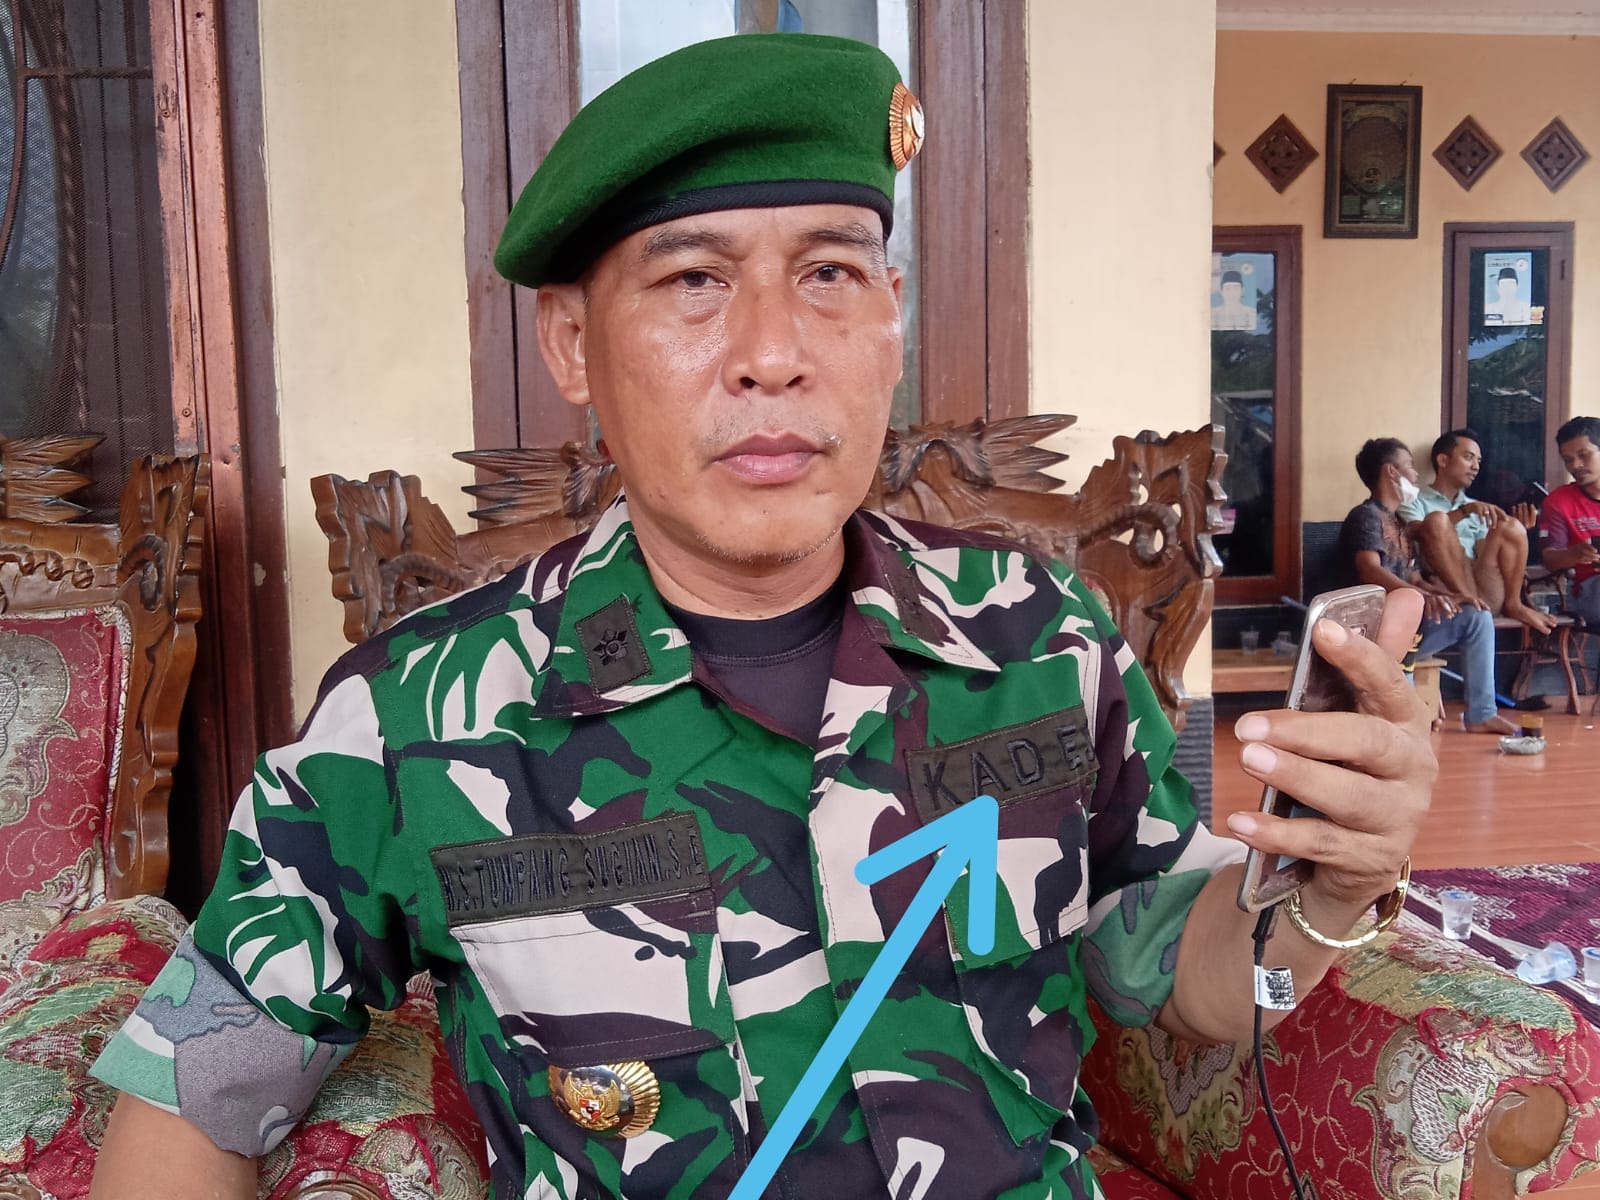 Oknum Kades di Tangerang Diduga Lecehkan Profesi Wartawan dan LSM, LDK Kepala Desa Bakal Dievaluasi